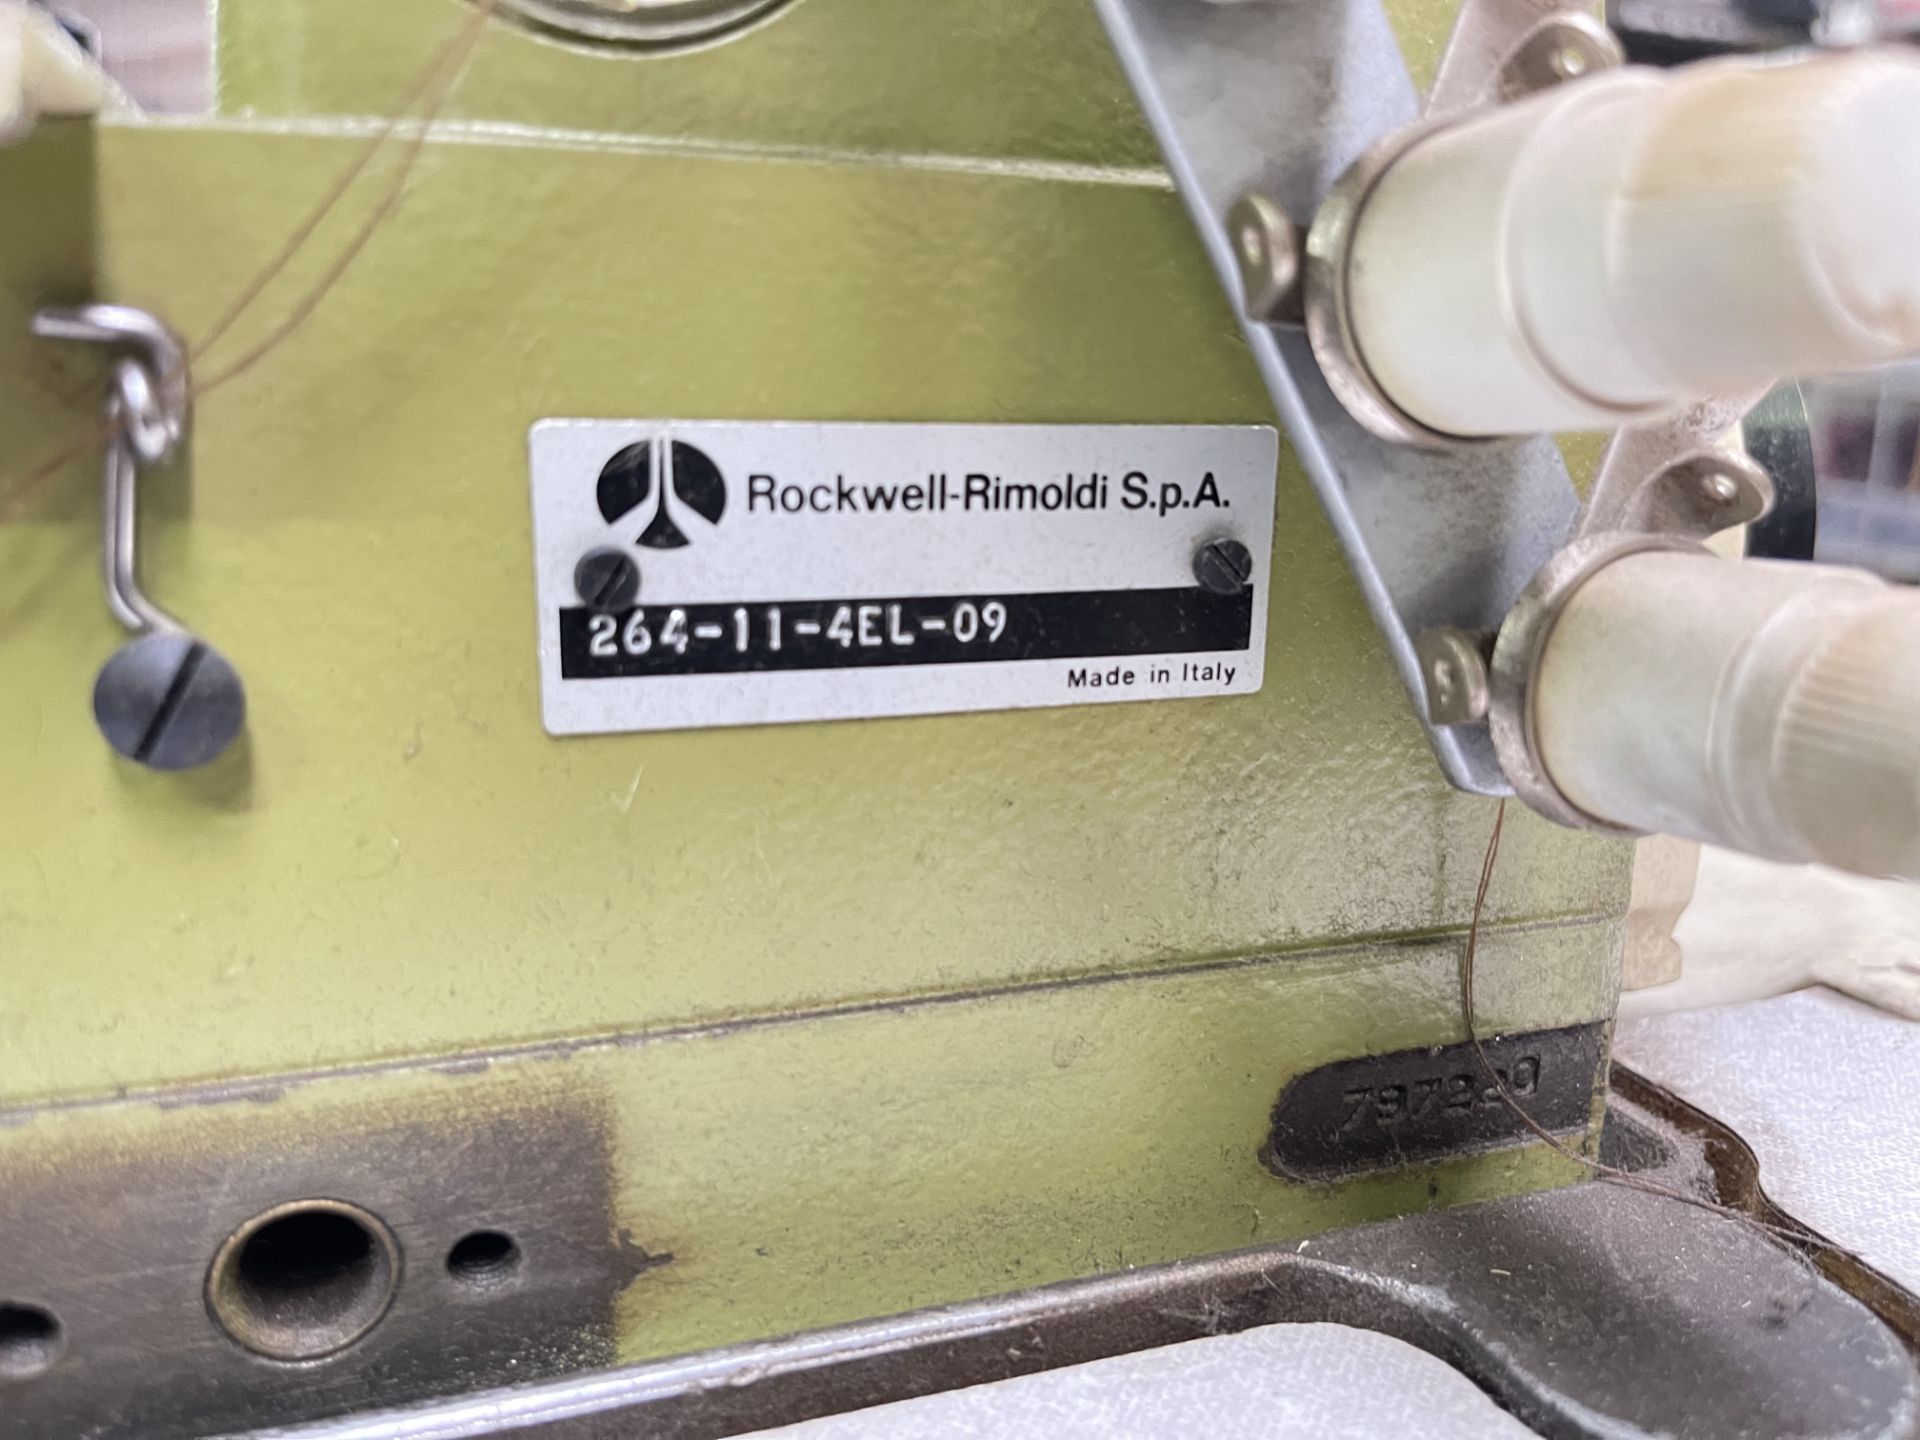 Rimoldi 264-11-4EL-09 Industrial Sewing Machine - Image 9 of 12